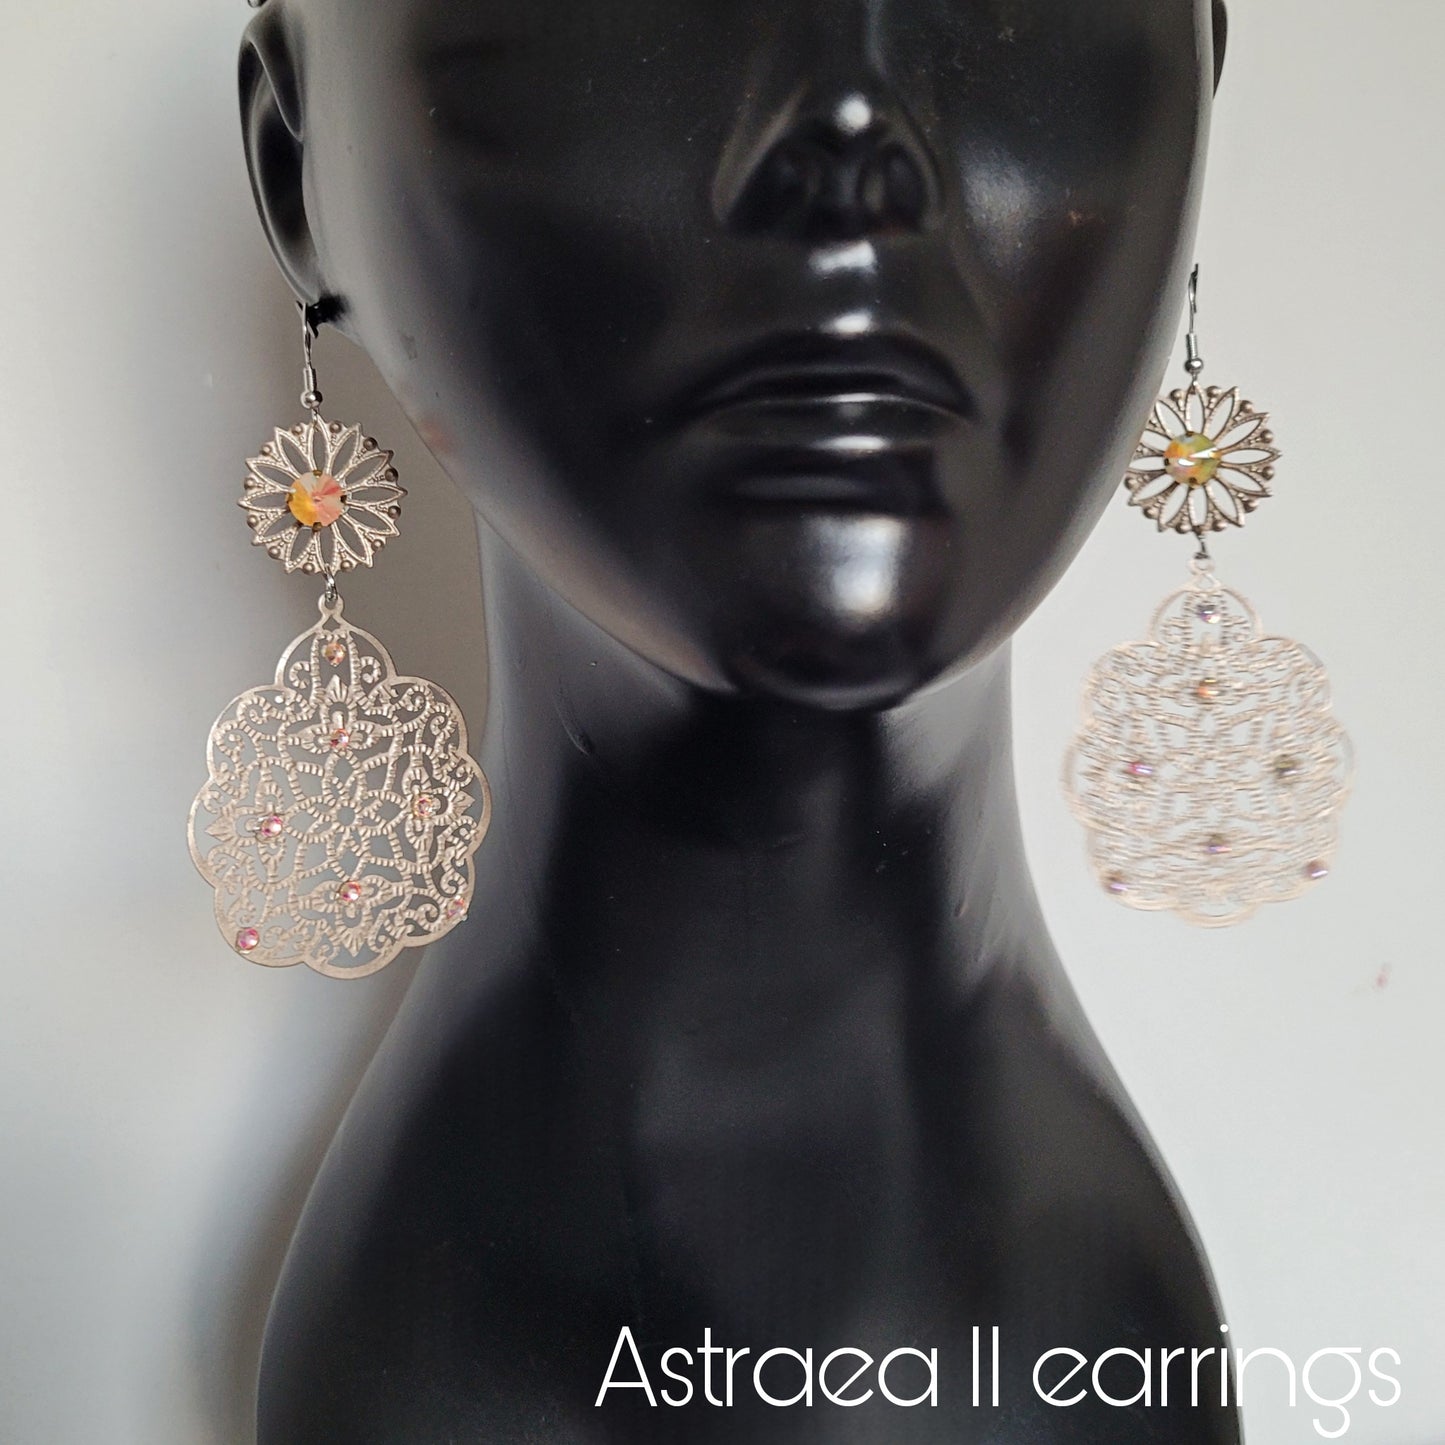 Deusa ex Machina collection: The Astraea earrings